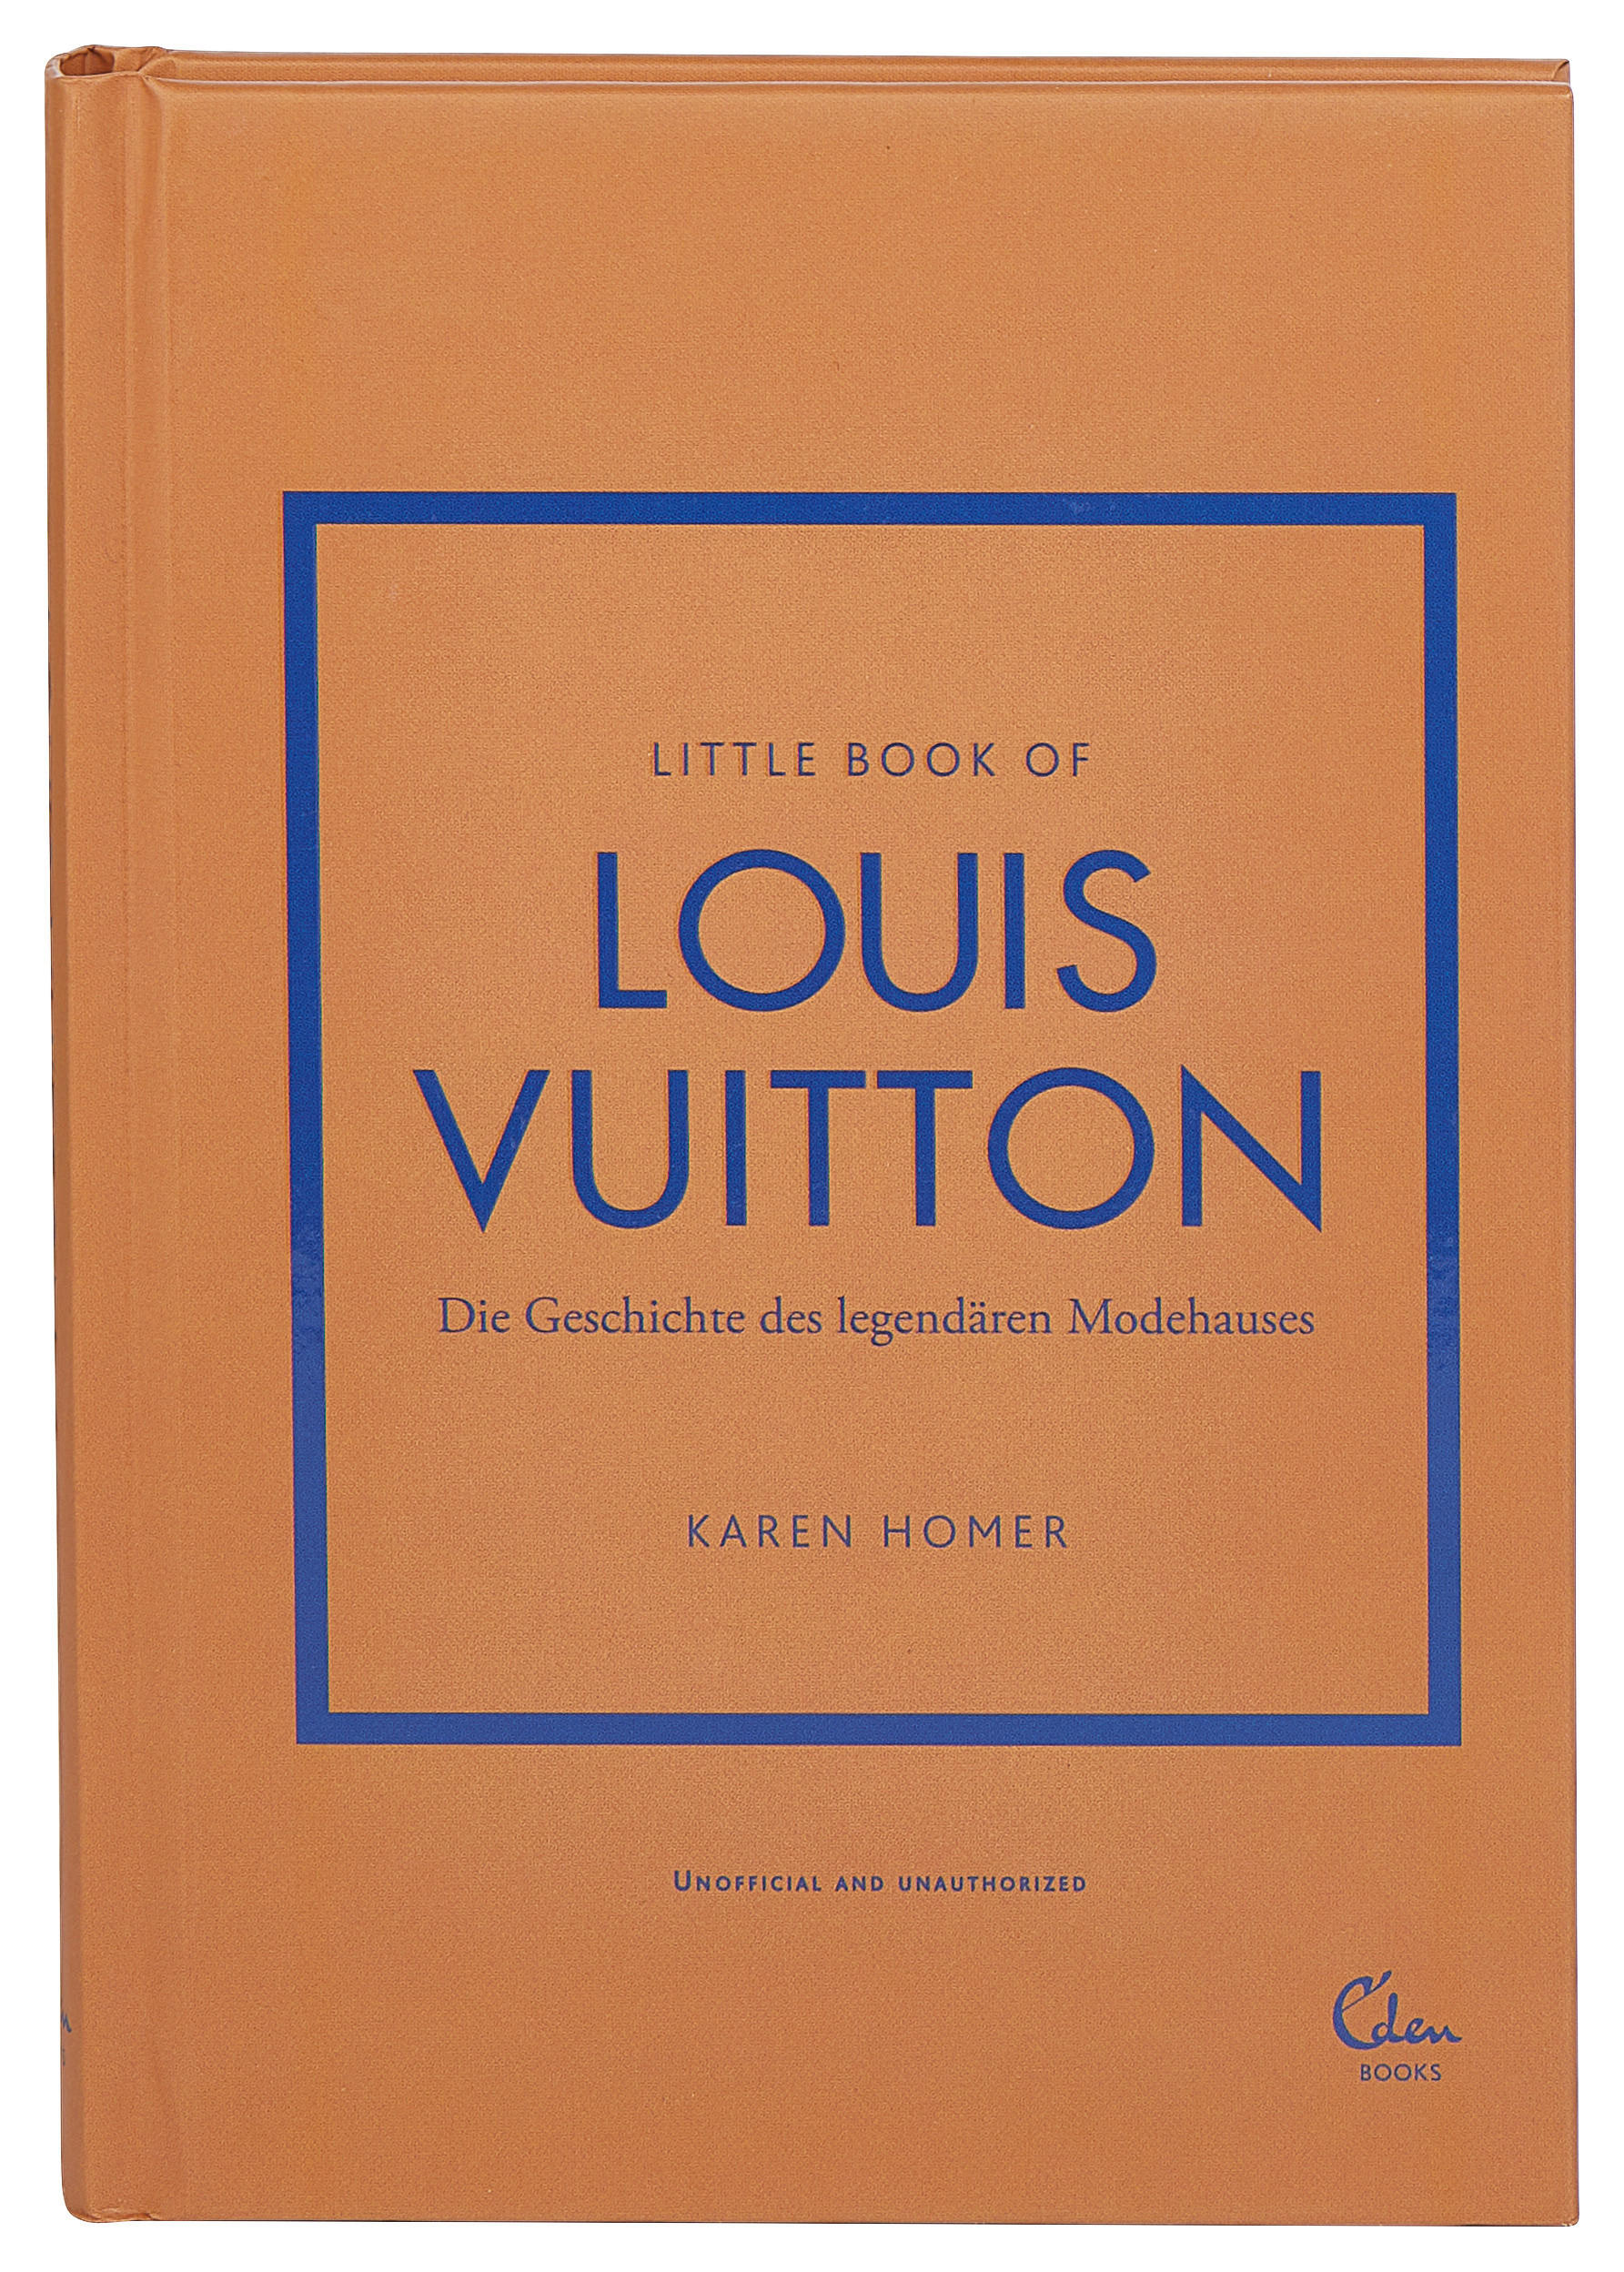 $59 Louis Vuitton book 🔥 The perfect coffee table book or decor book!